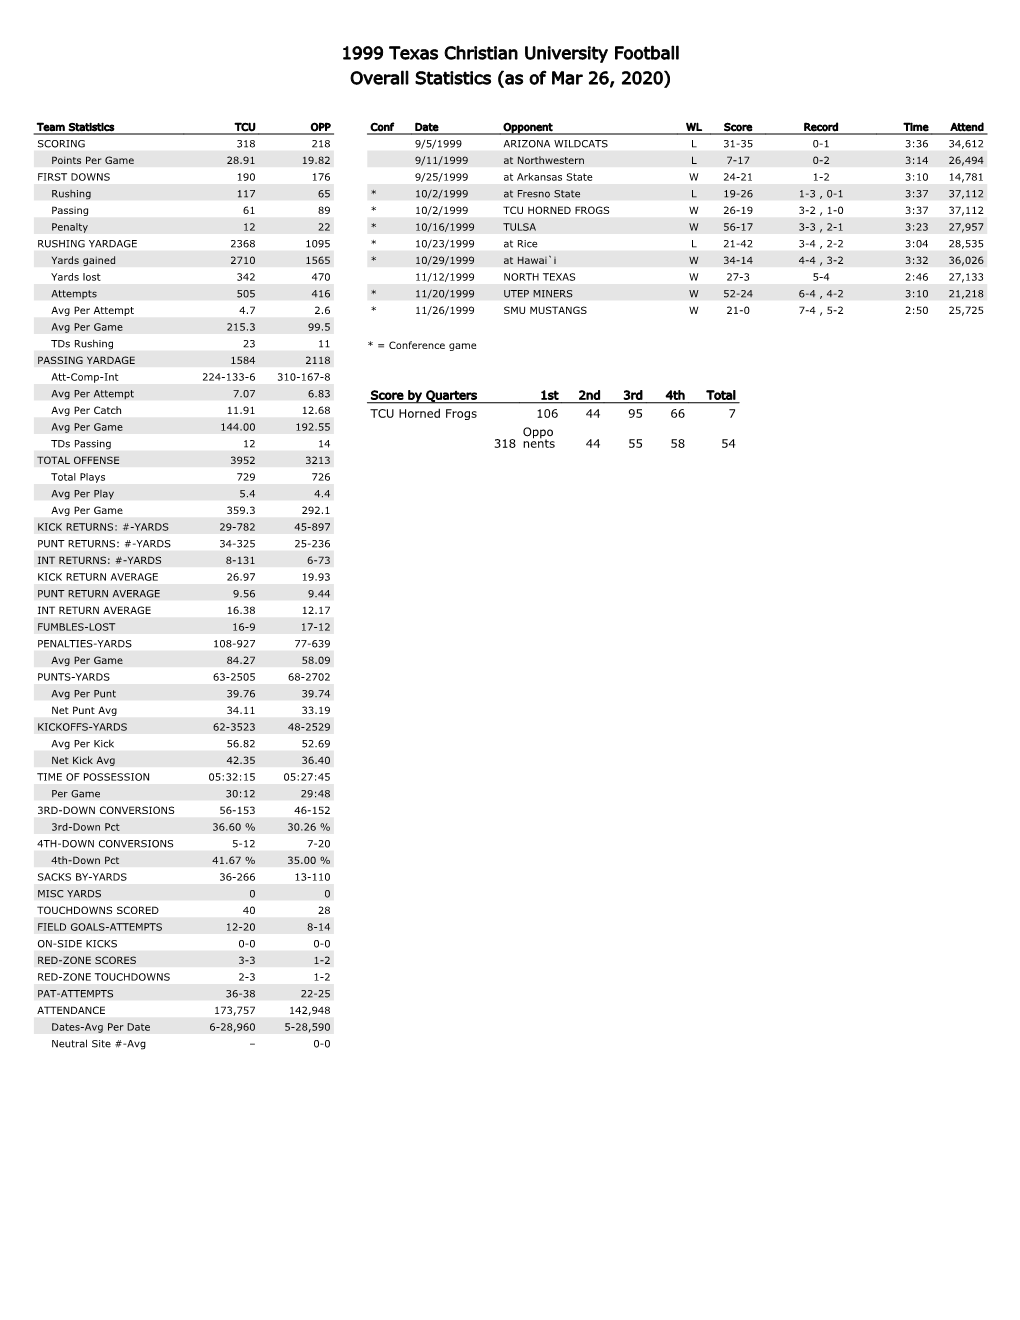 1999 Texas Christian University Football Overall Statistics (As of Mar 26, 2020)